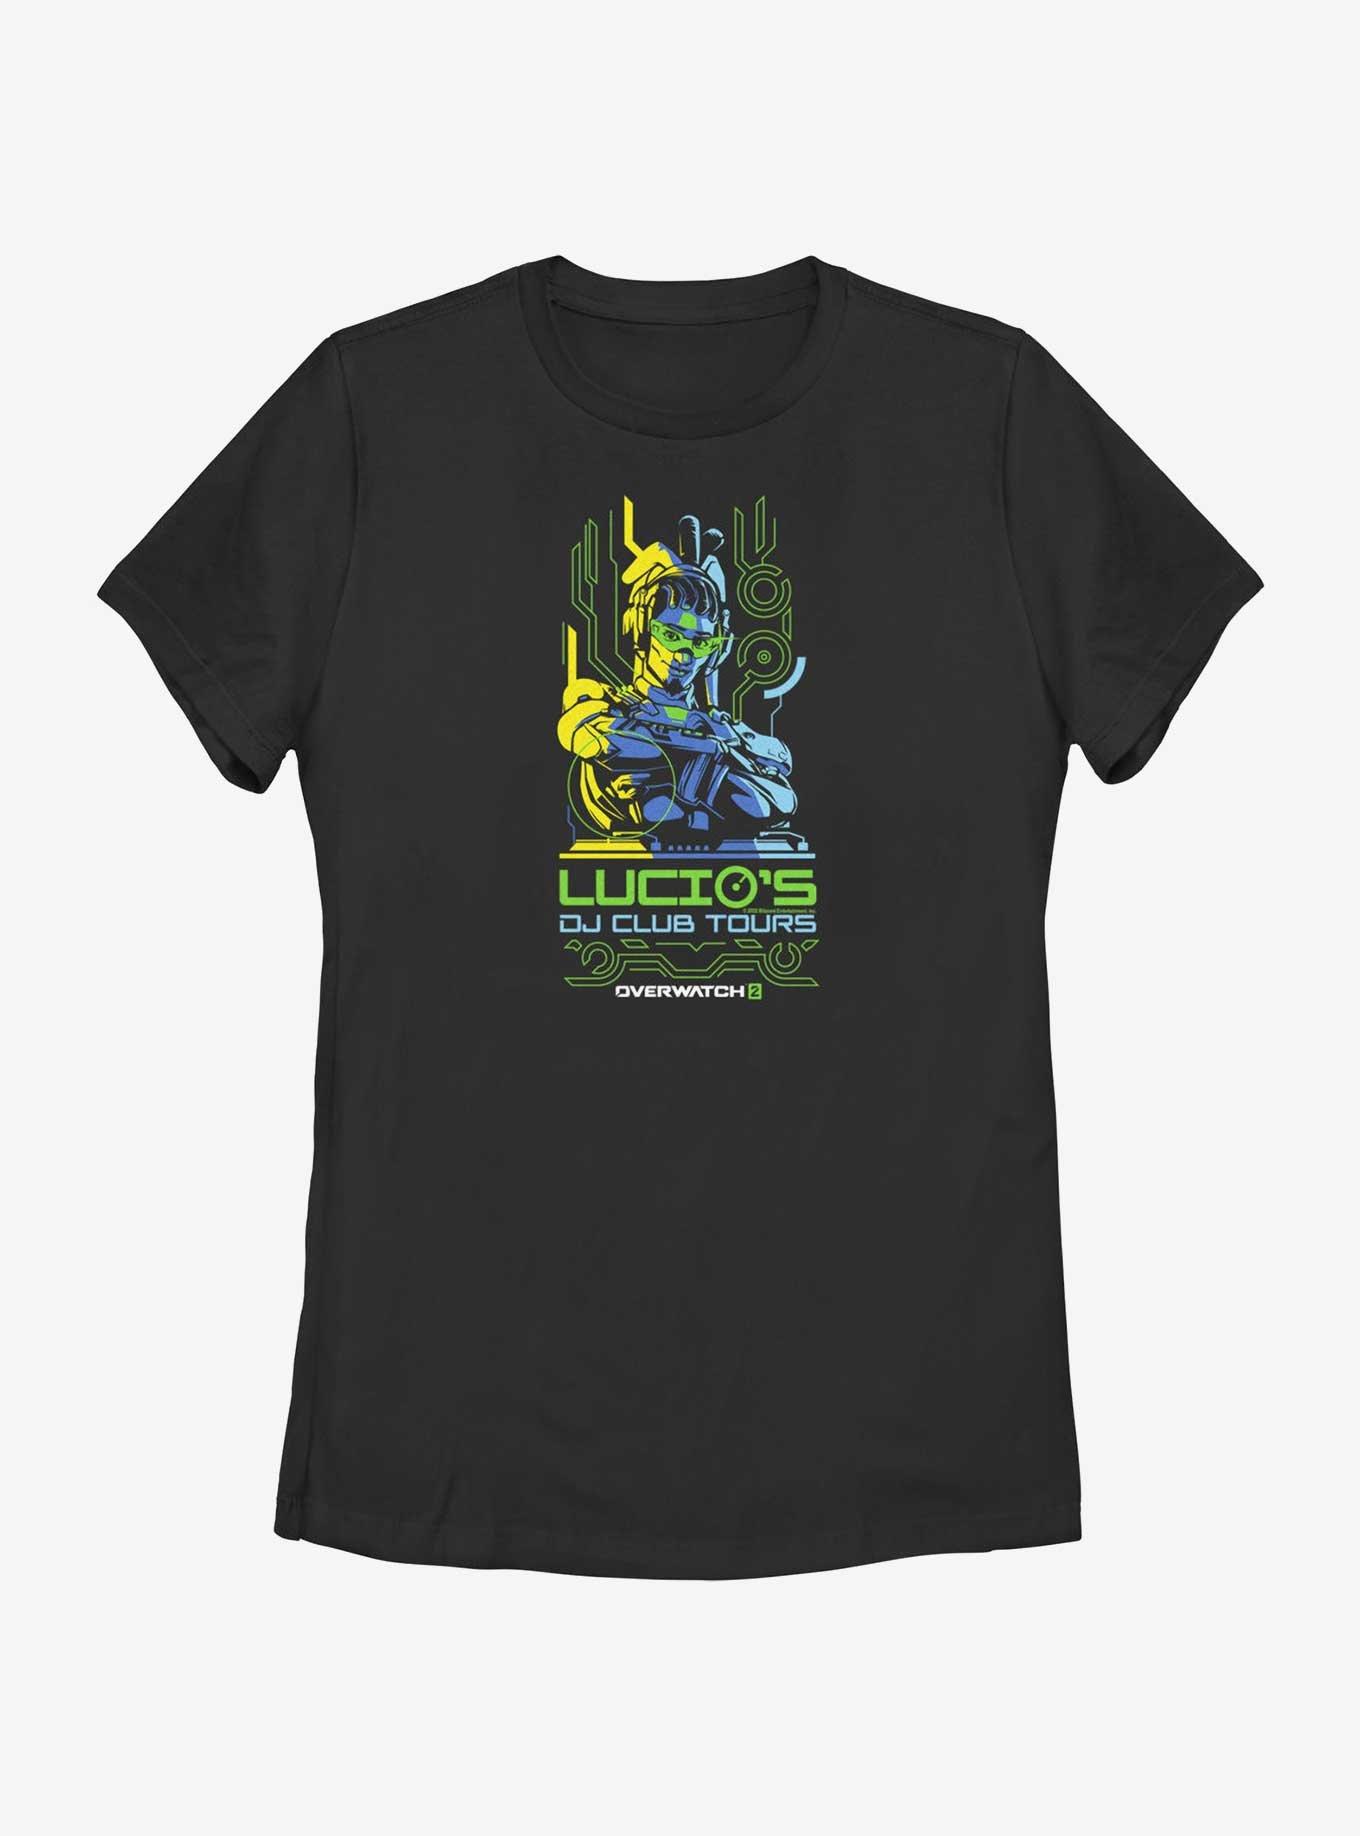 Overwatch 2 DJ Lucio Girls T-Shirt